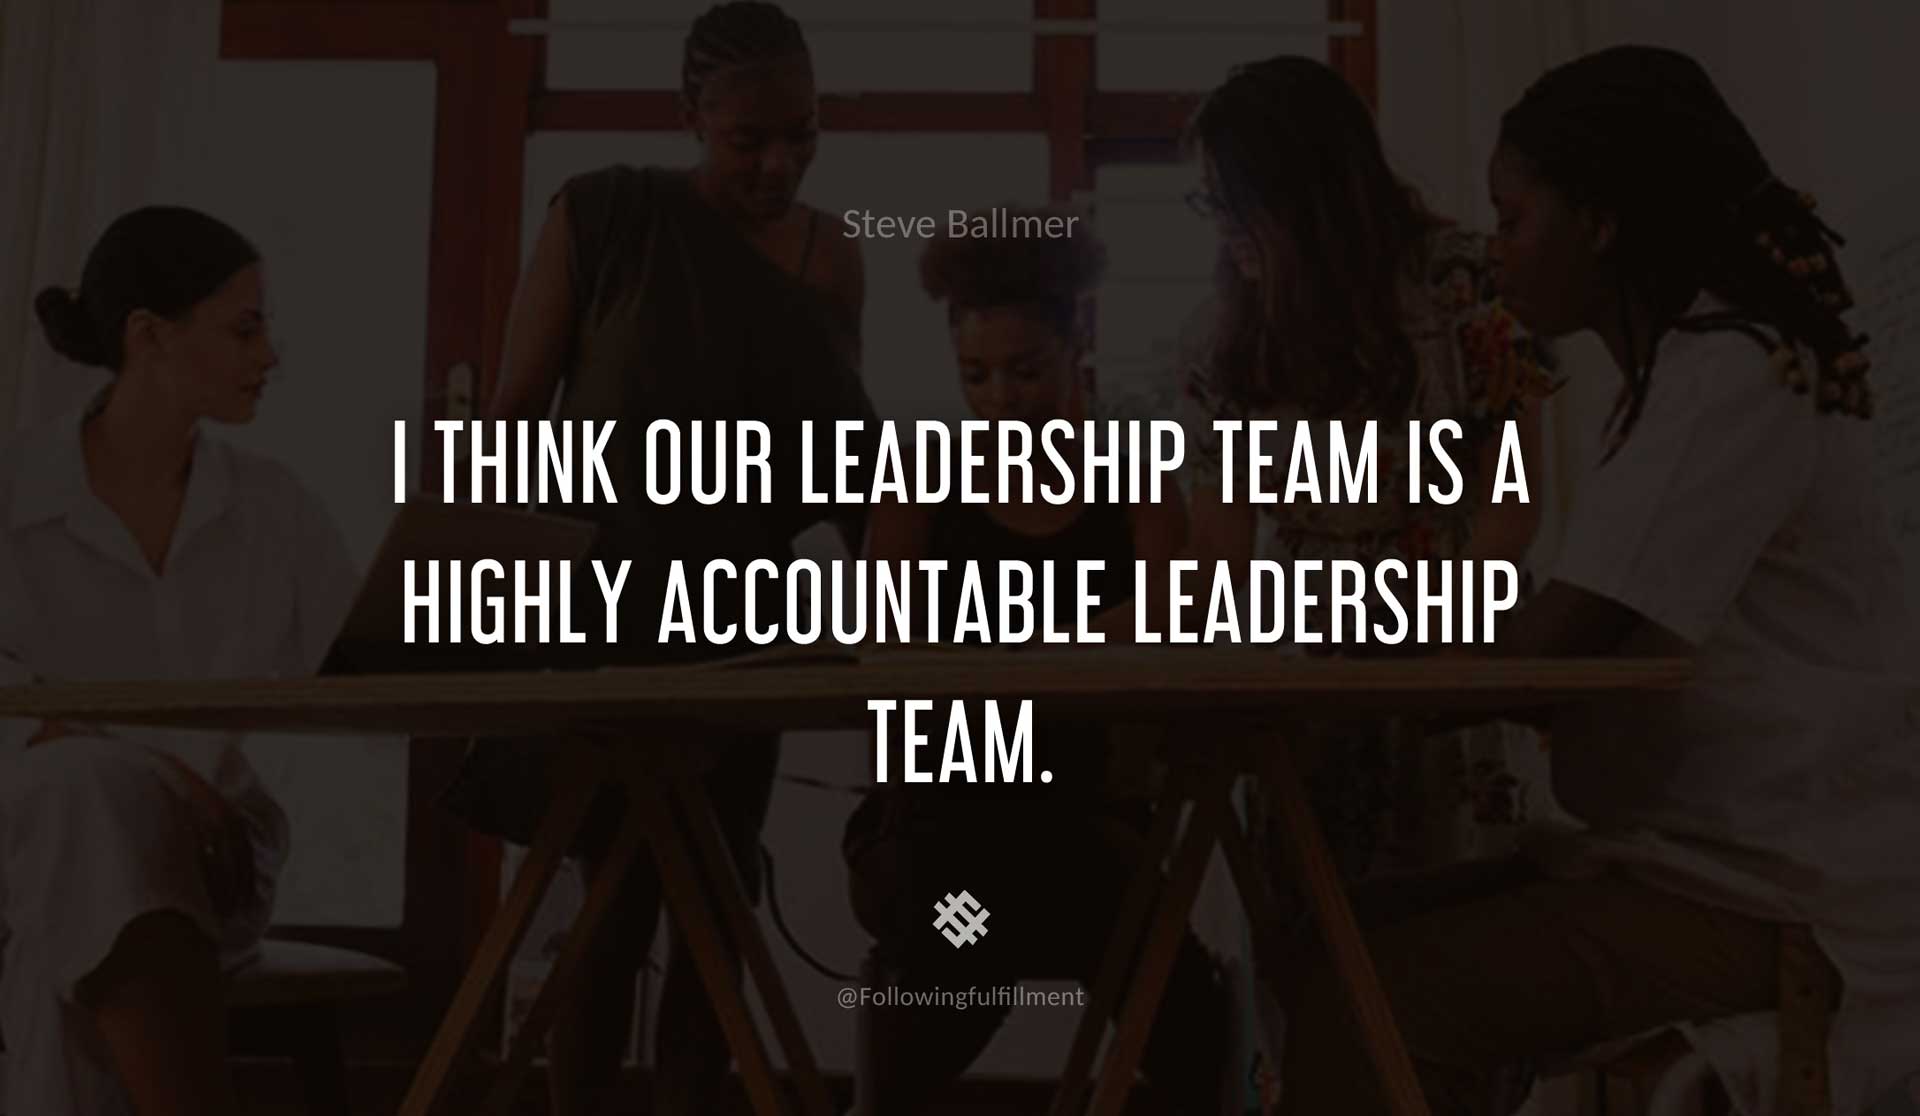 I-think-our-leadership-team-is-a-highly-accountable-leadership-team.-STEVE-BALLMER-Quote.jpg